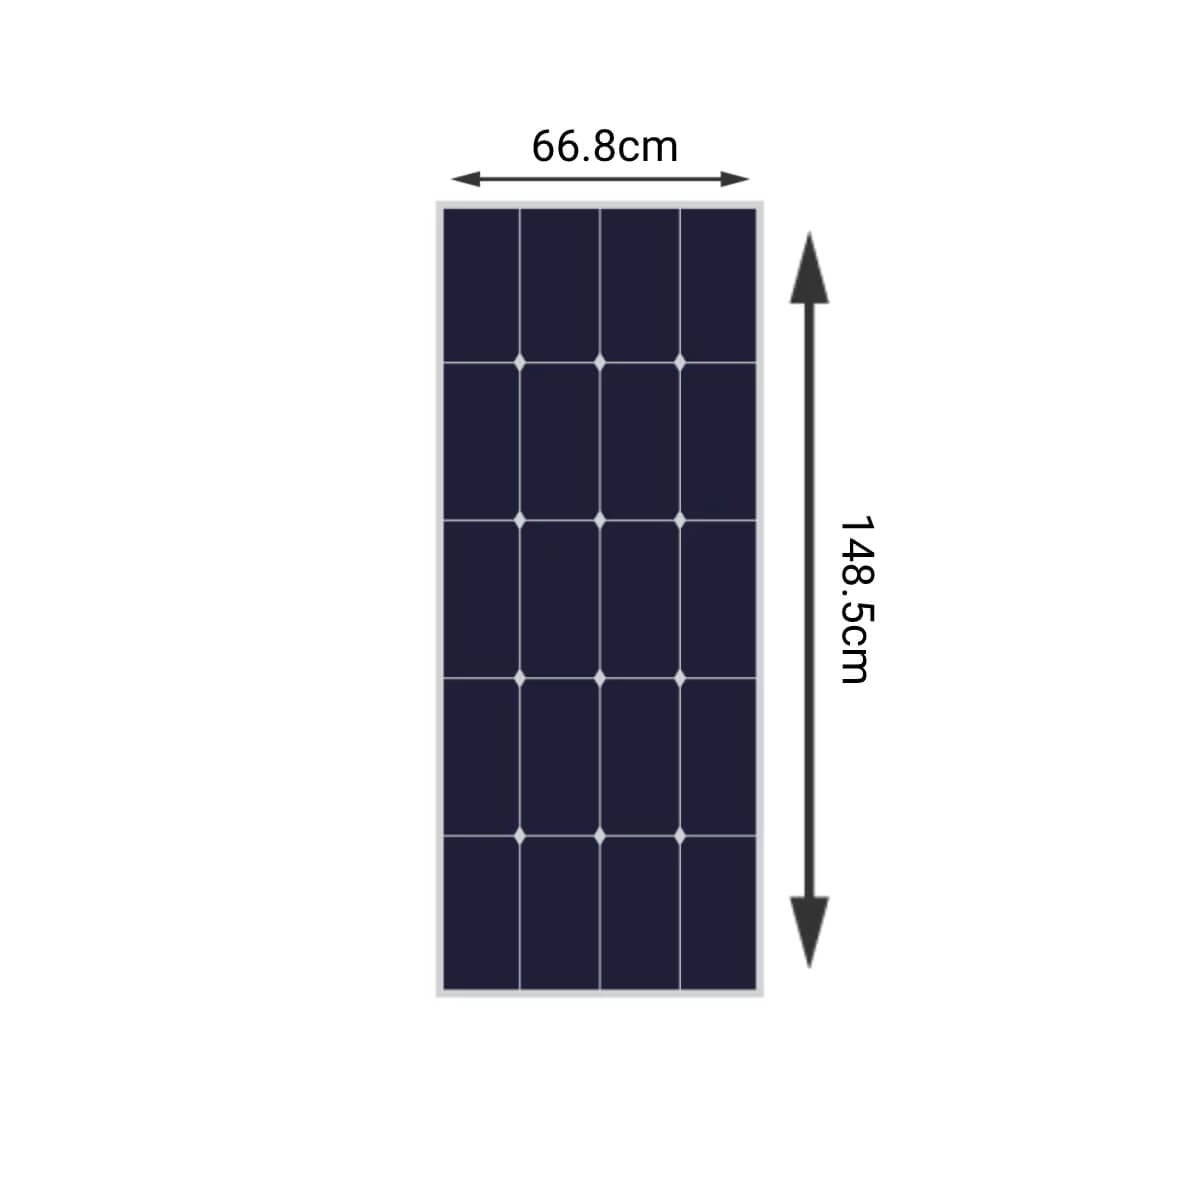 350W Solar Panel Kit – 2x 175W dimensions